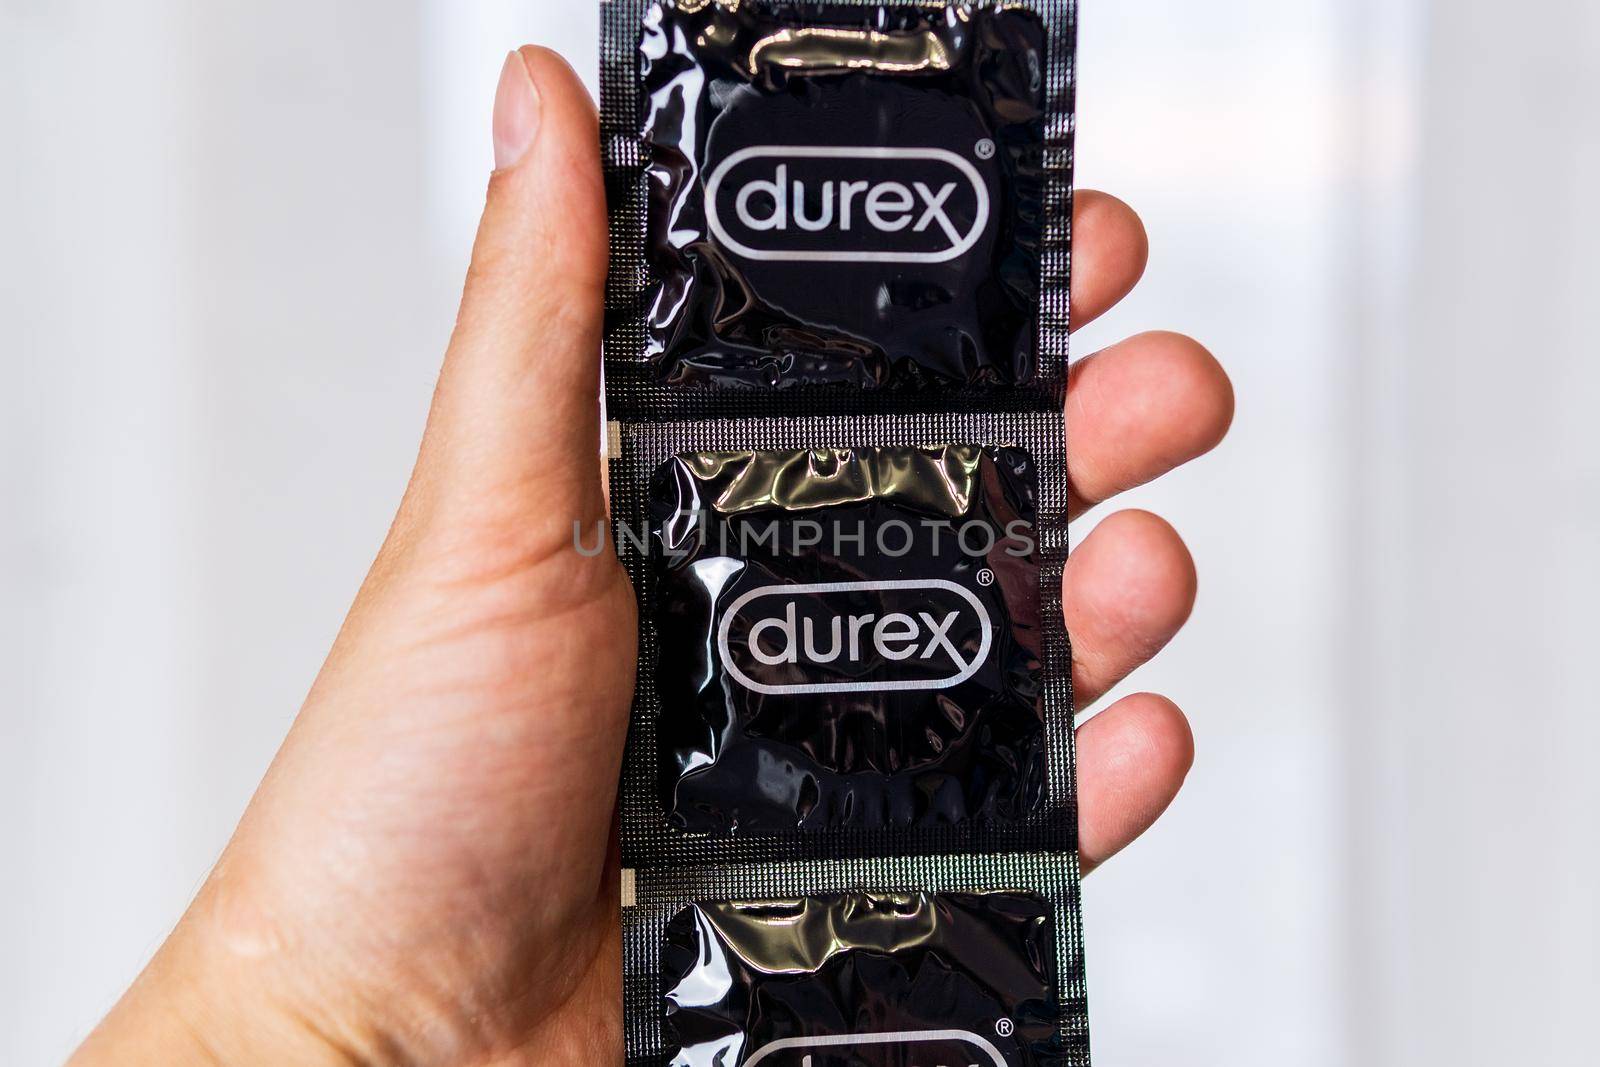 Tyumen, Russia-april 22, 2021: hand holds a box of Durex brand condoms.